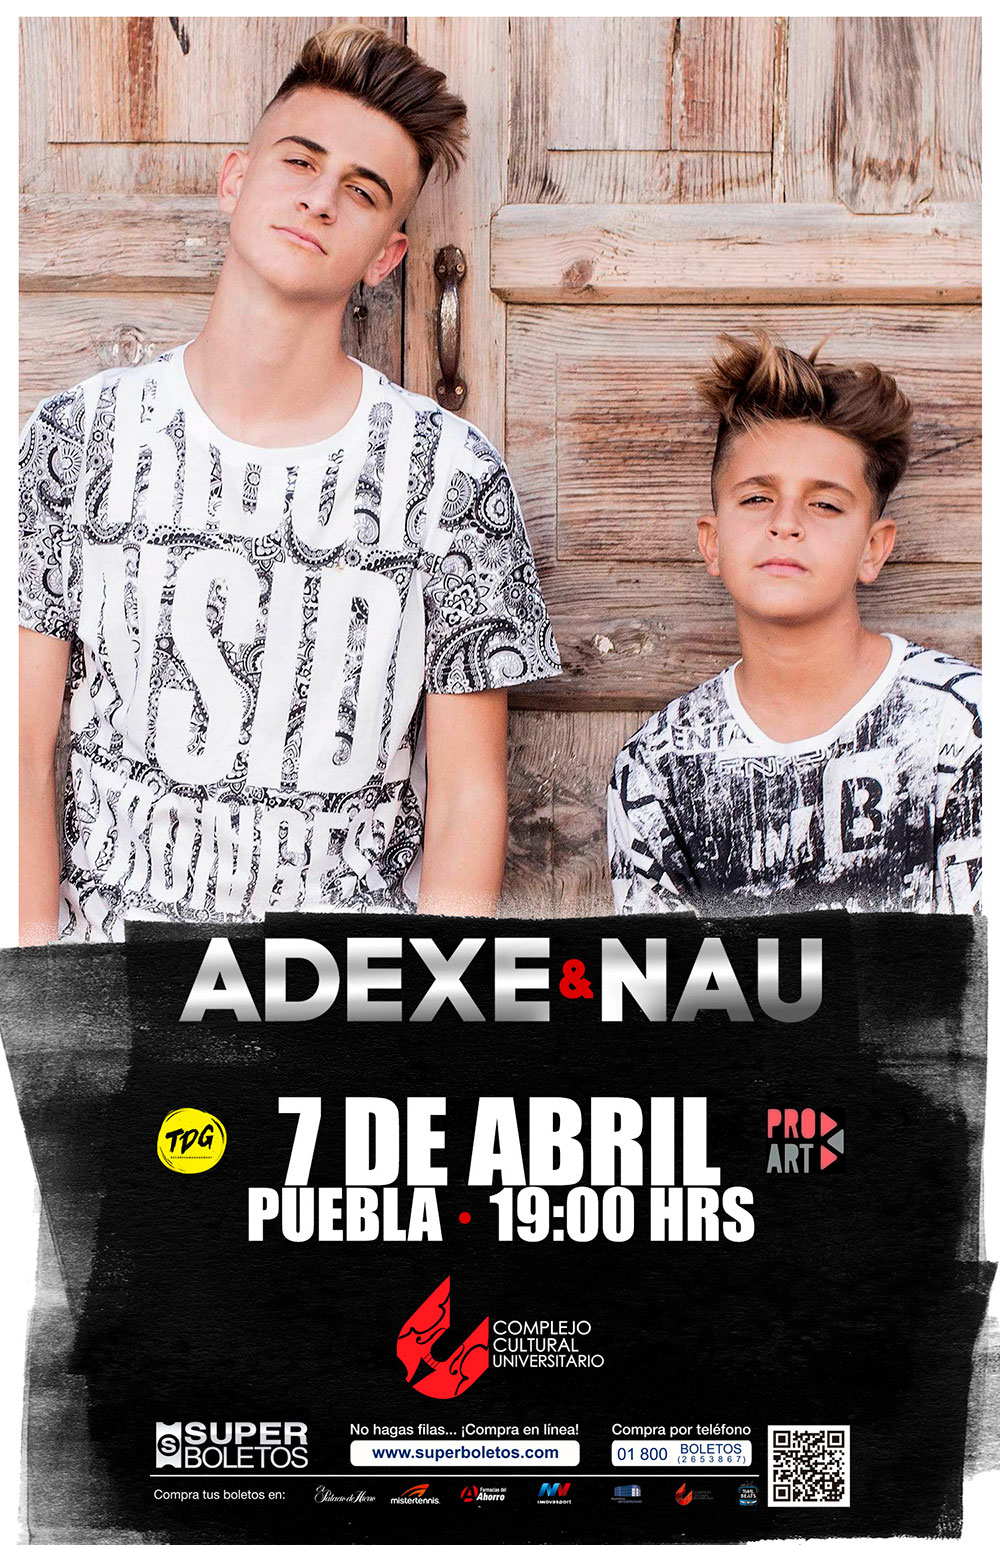 Adexe & Nau @ Puebla